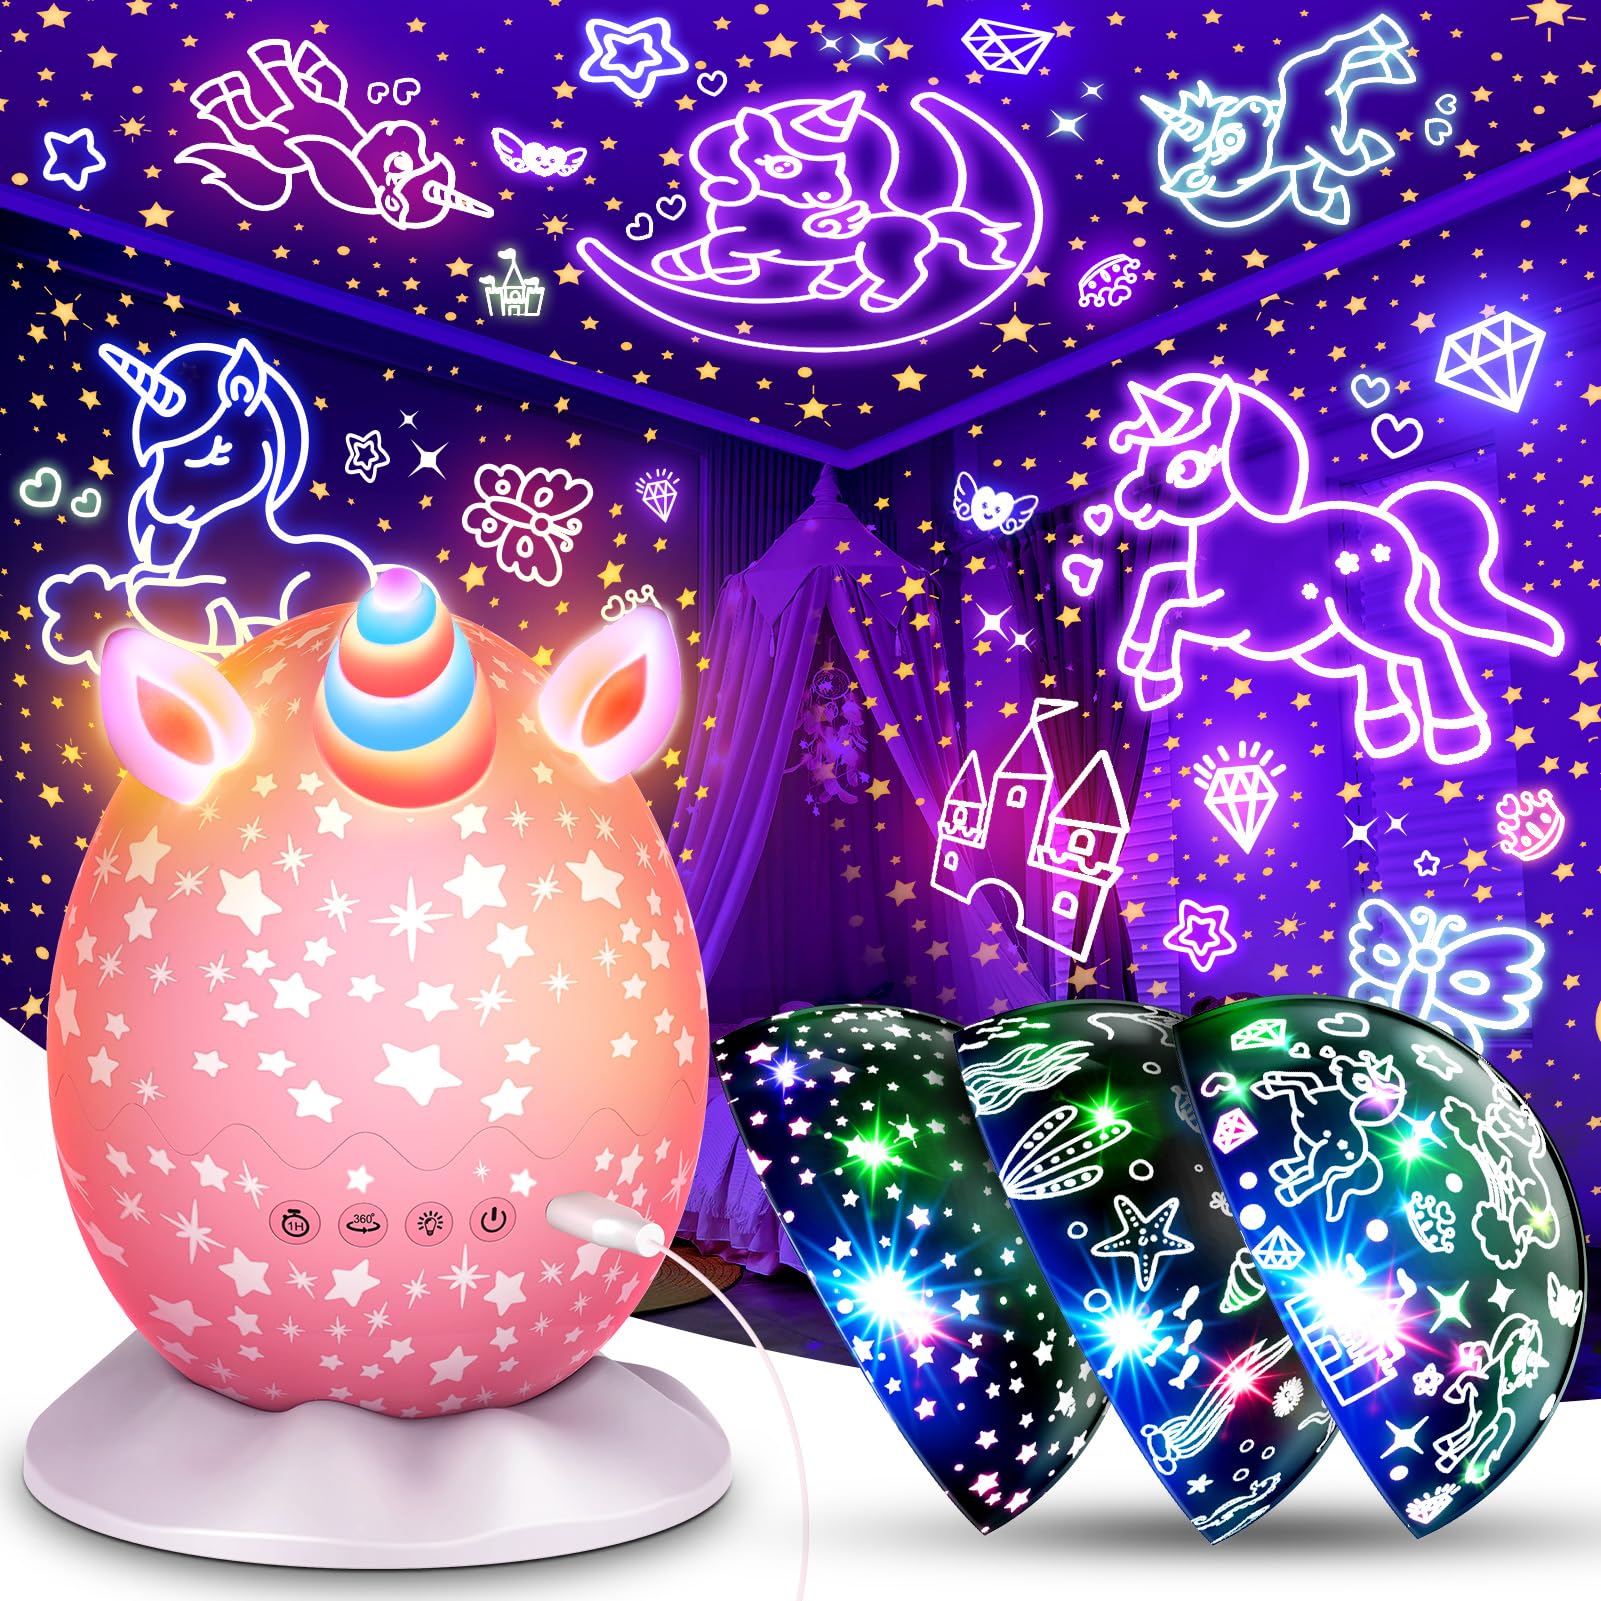 STRAWBETTER Unicorn Night Light Kids Toys 3 in 1 Unicorns & Starry Sky & Sea World Nights Lights Projector for 3 4 5 6 7 8 9 10 11 12 Year Old Girls Birthday Basket Stuffers Gifts for Kids 3-12